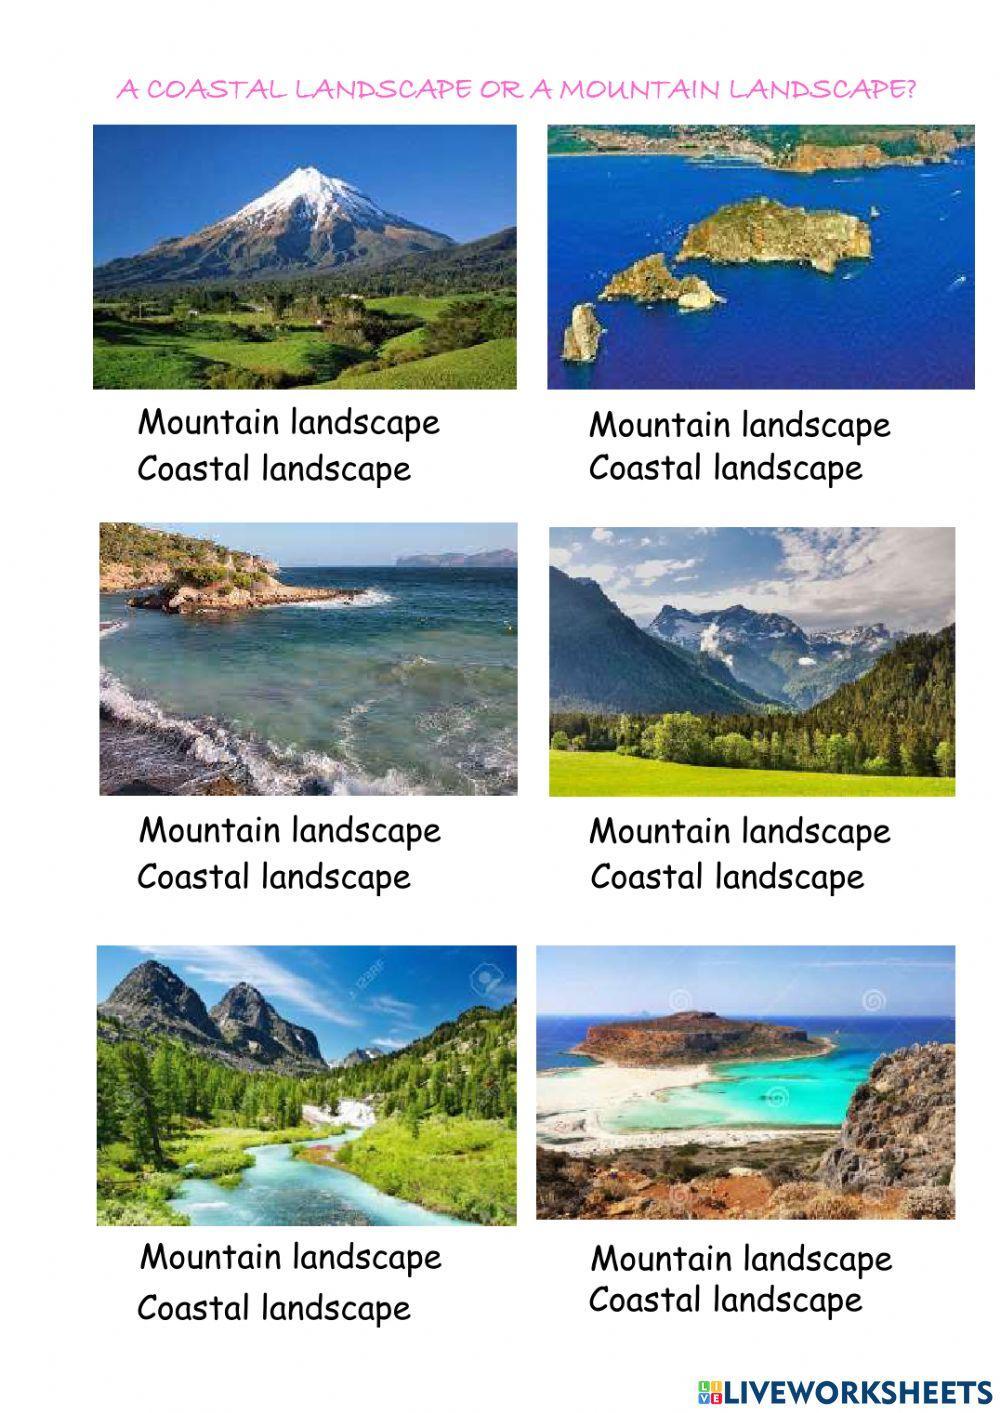 Coastal-mountain landscapes